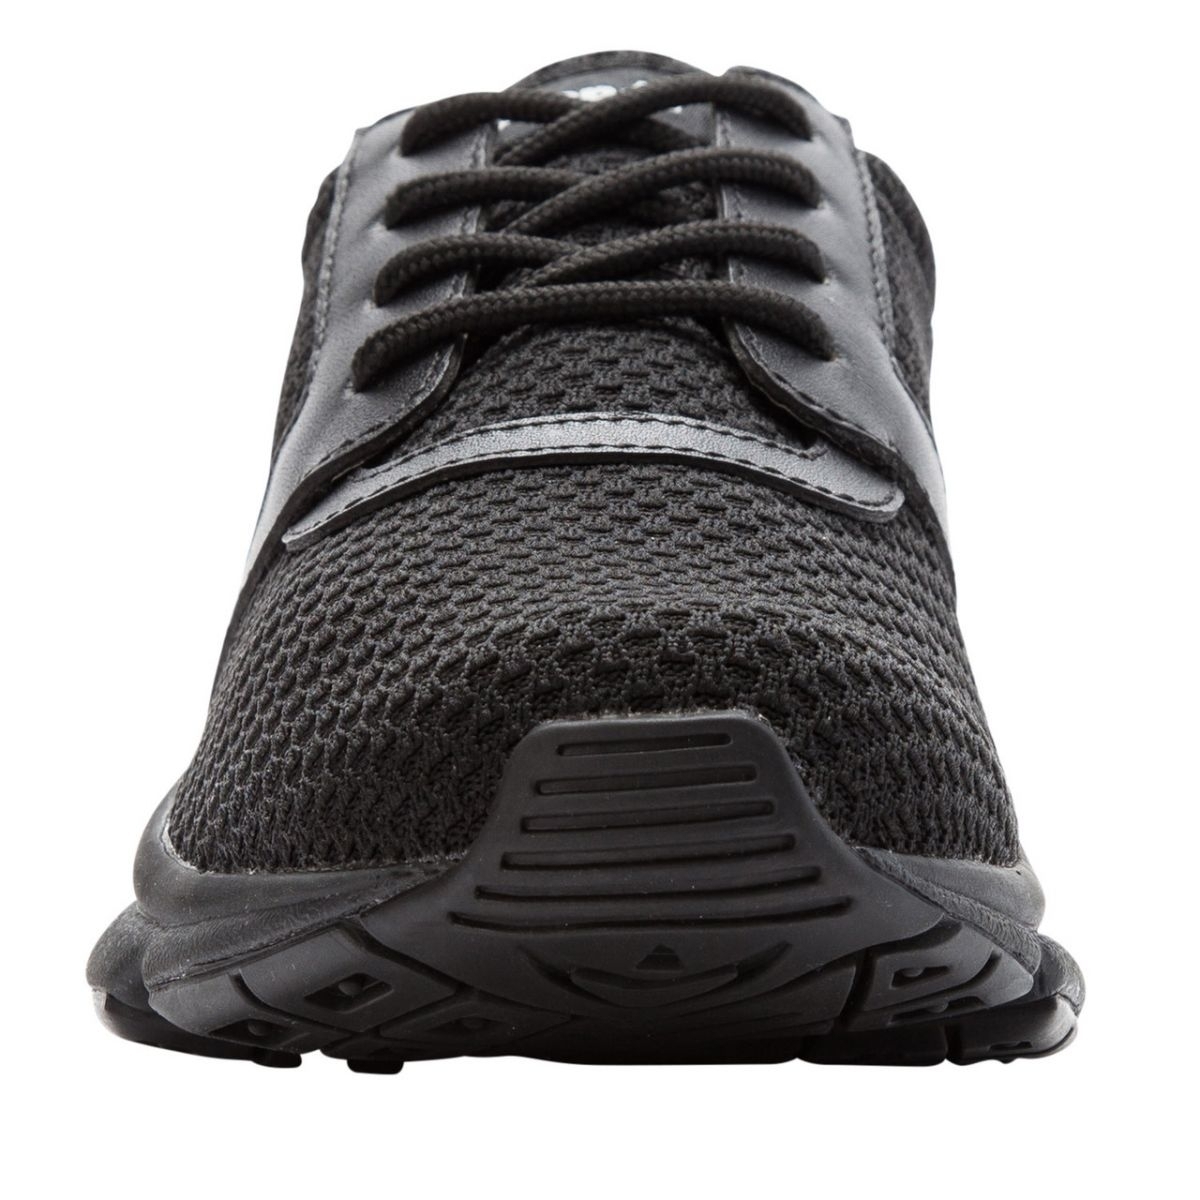 Propet Women's Stability X Walking Shoe Black - WAA032MBLK BLACK - BLACK, 9.5 M US